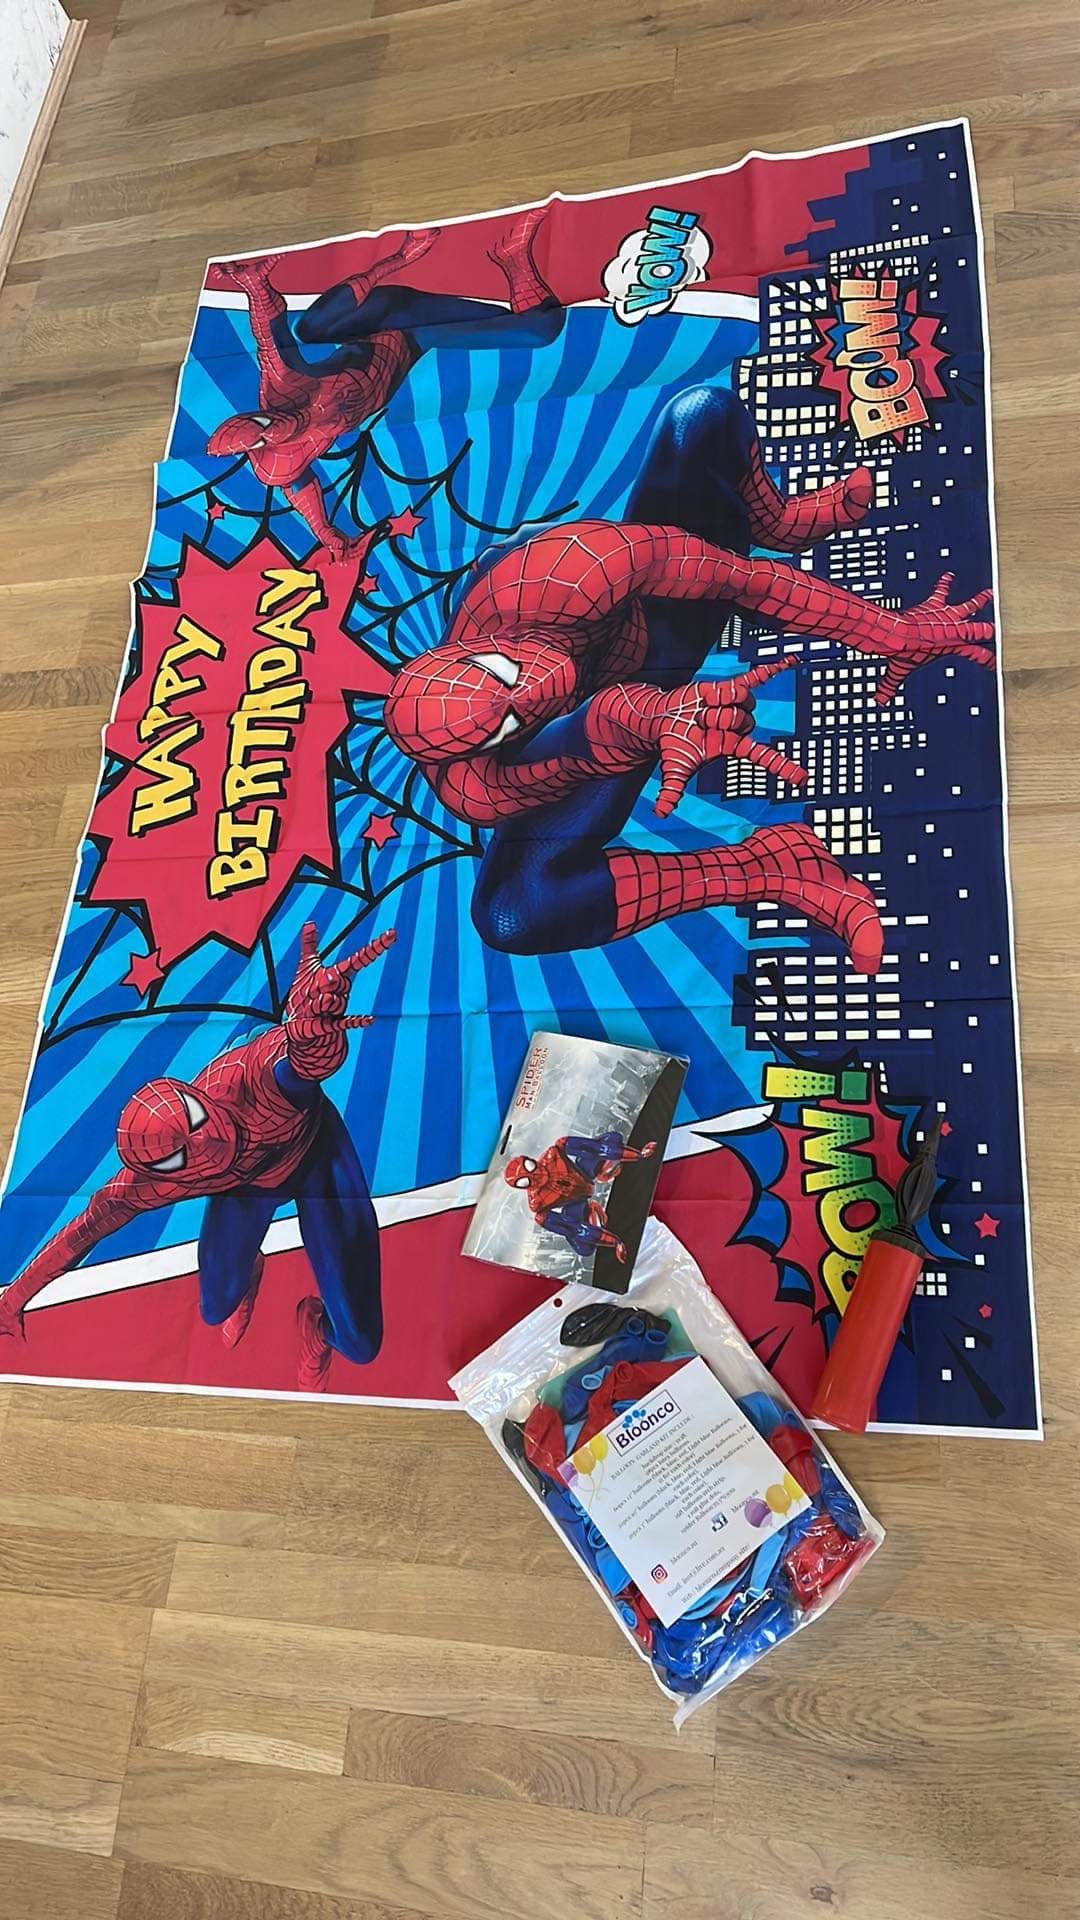 Spiderman Theme Balloon Garland Kit - Live Shopping Tours